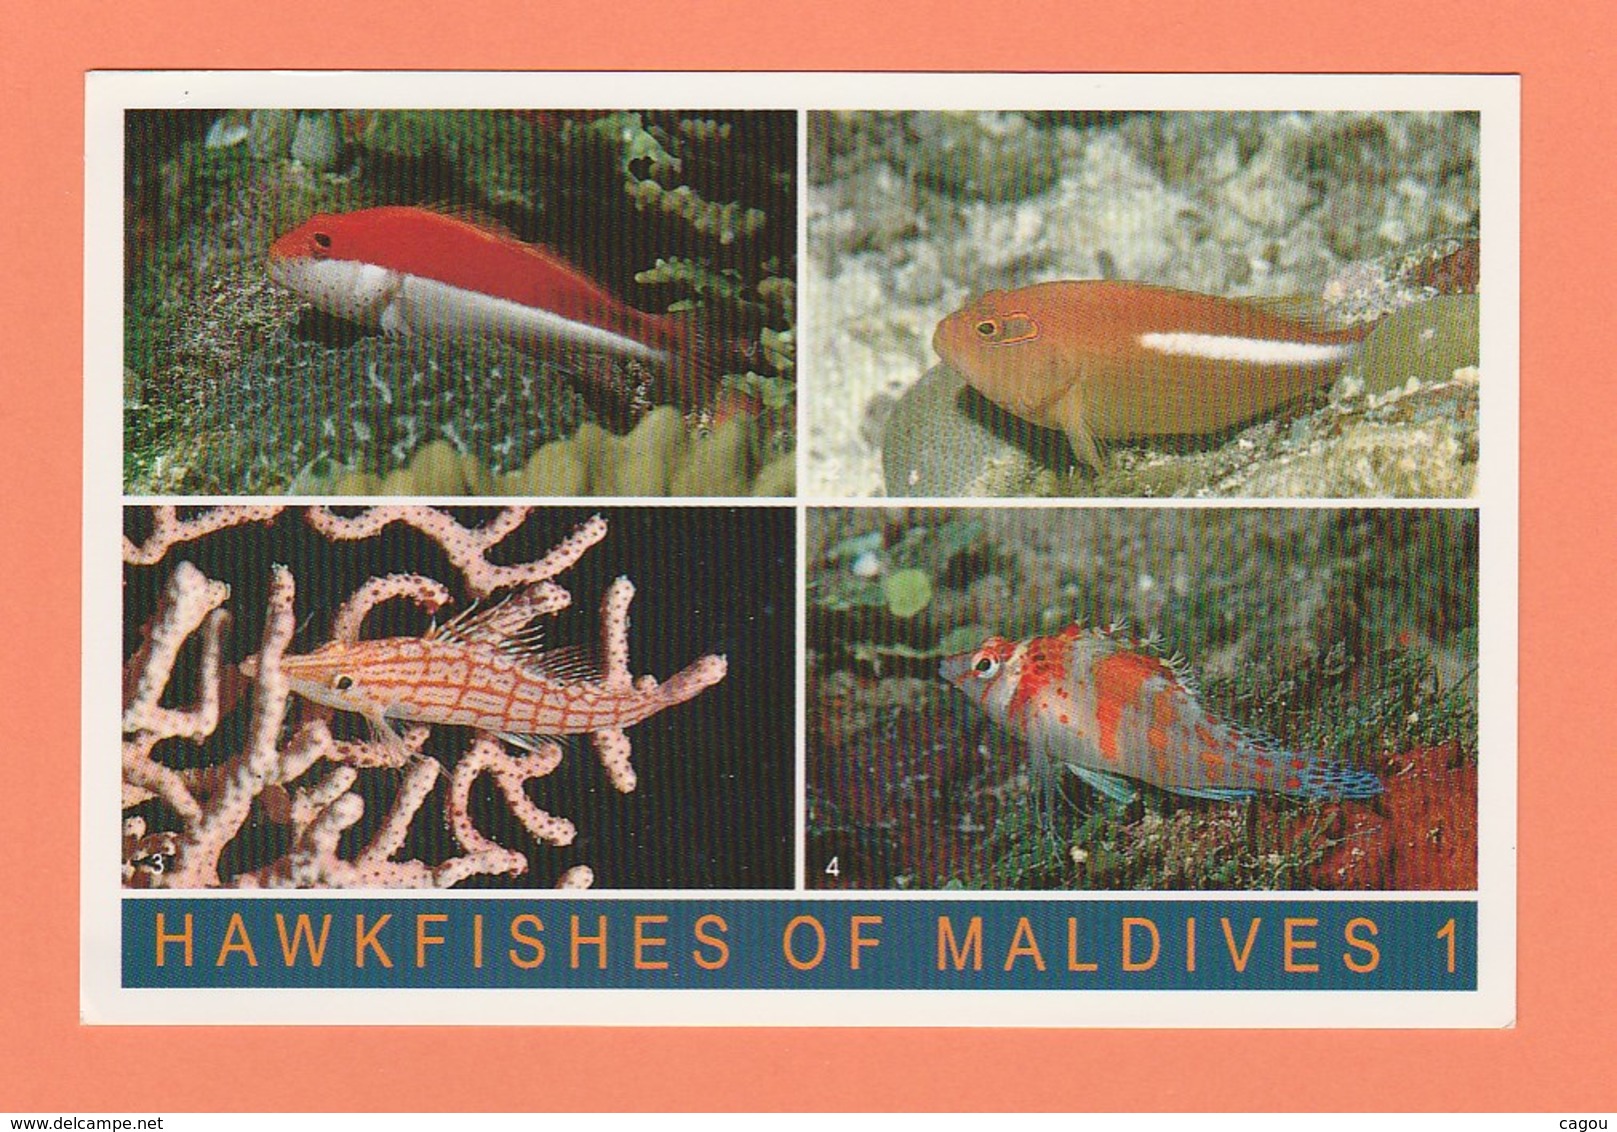 MALDIVES - HAWKFISHES OF MALDIVES 1 - Maldives